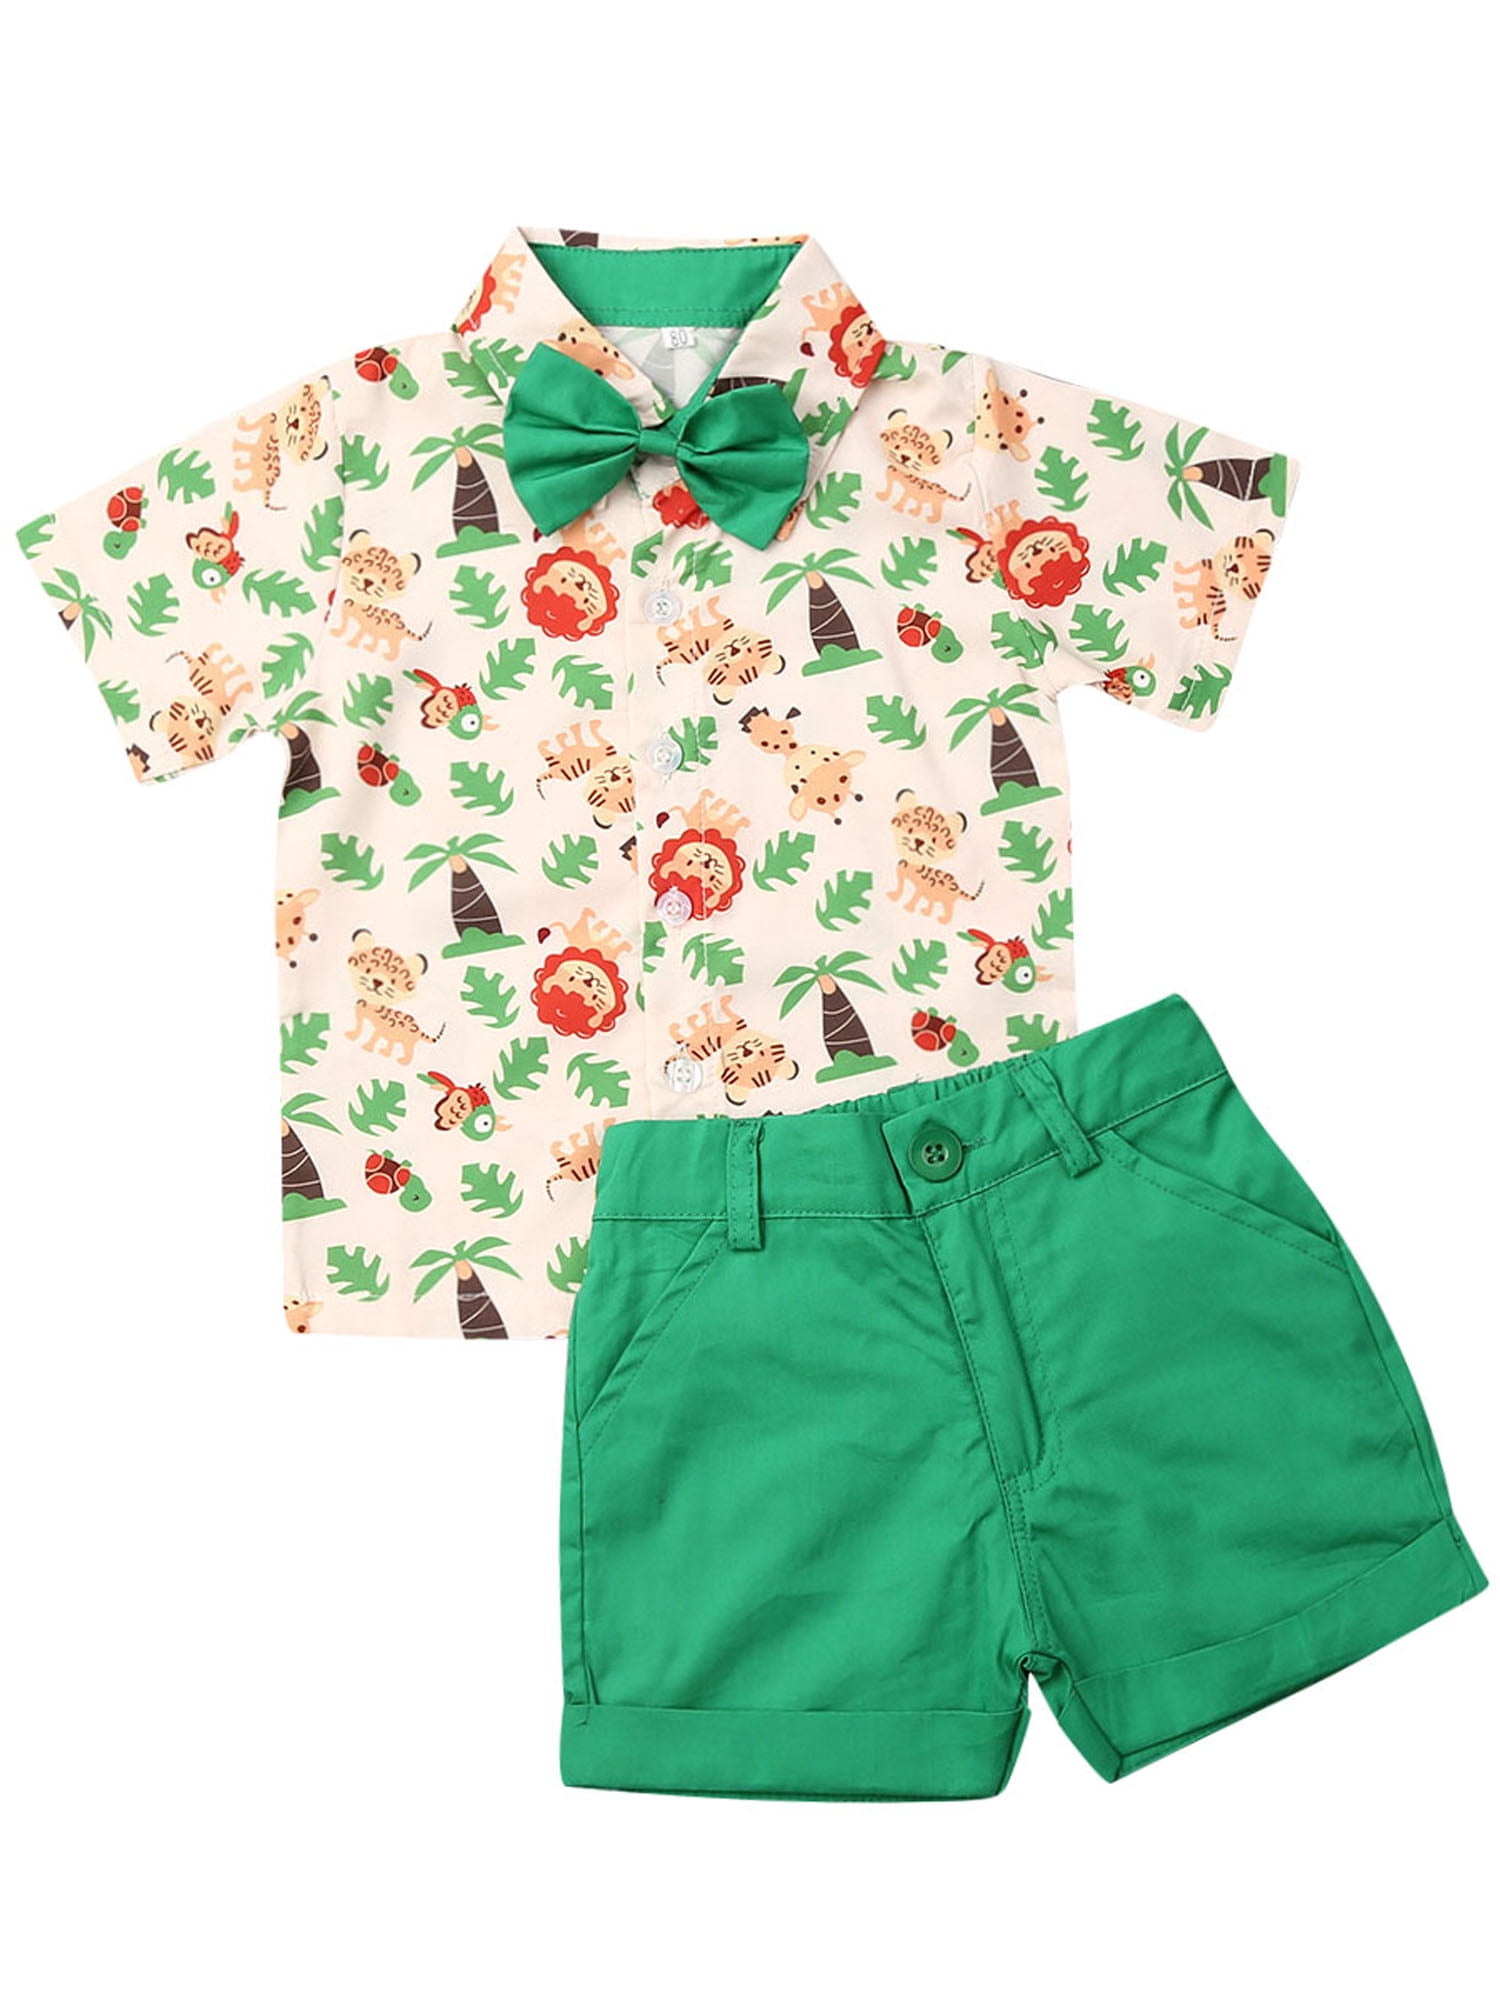 Kehen Kids Toddler Baby Boy Parrot Print Short Sleeve Tee Striped Shorts Sets 2pcs Summer Causal T-Shirt Suit